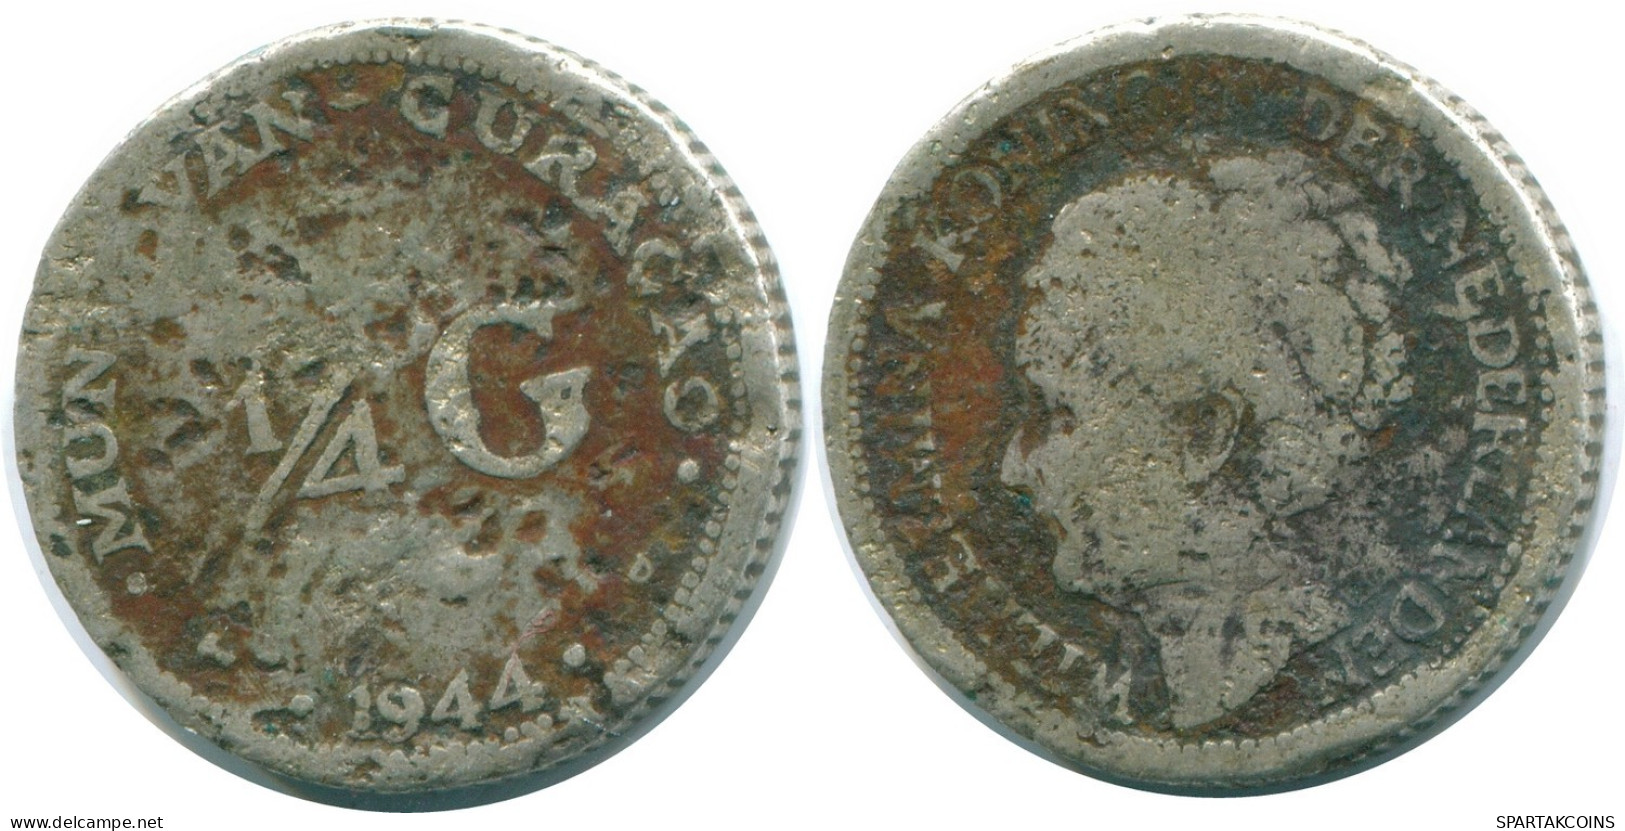 1/4 GULDEN 1944 CURACAO Netherlands SILVER Colonial Coin #NL10673.4.U.A - Curacao